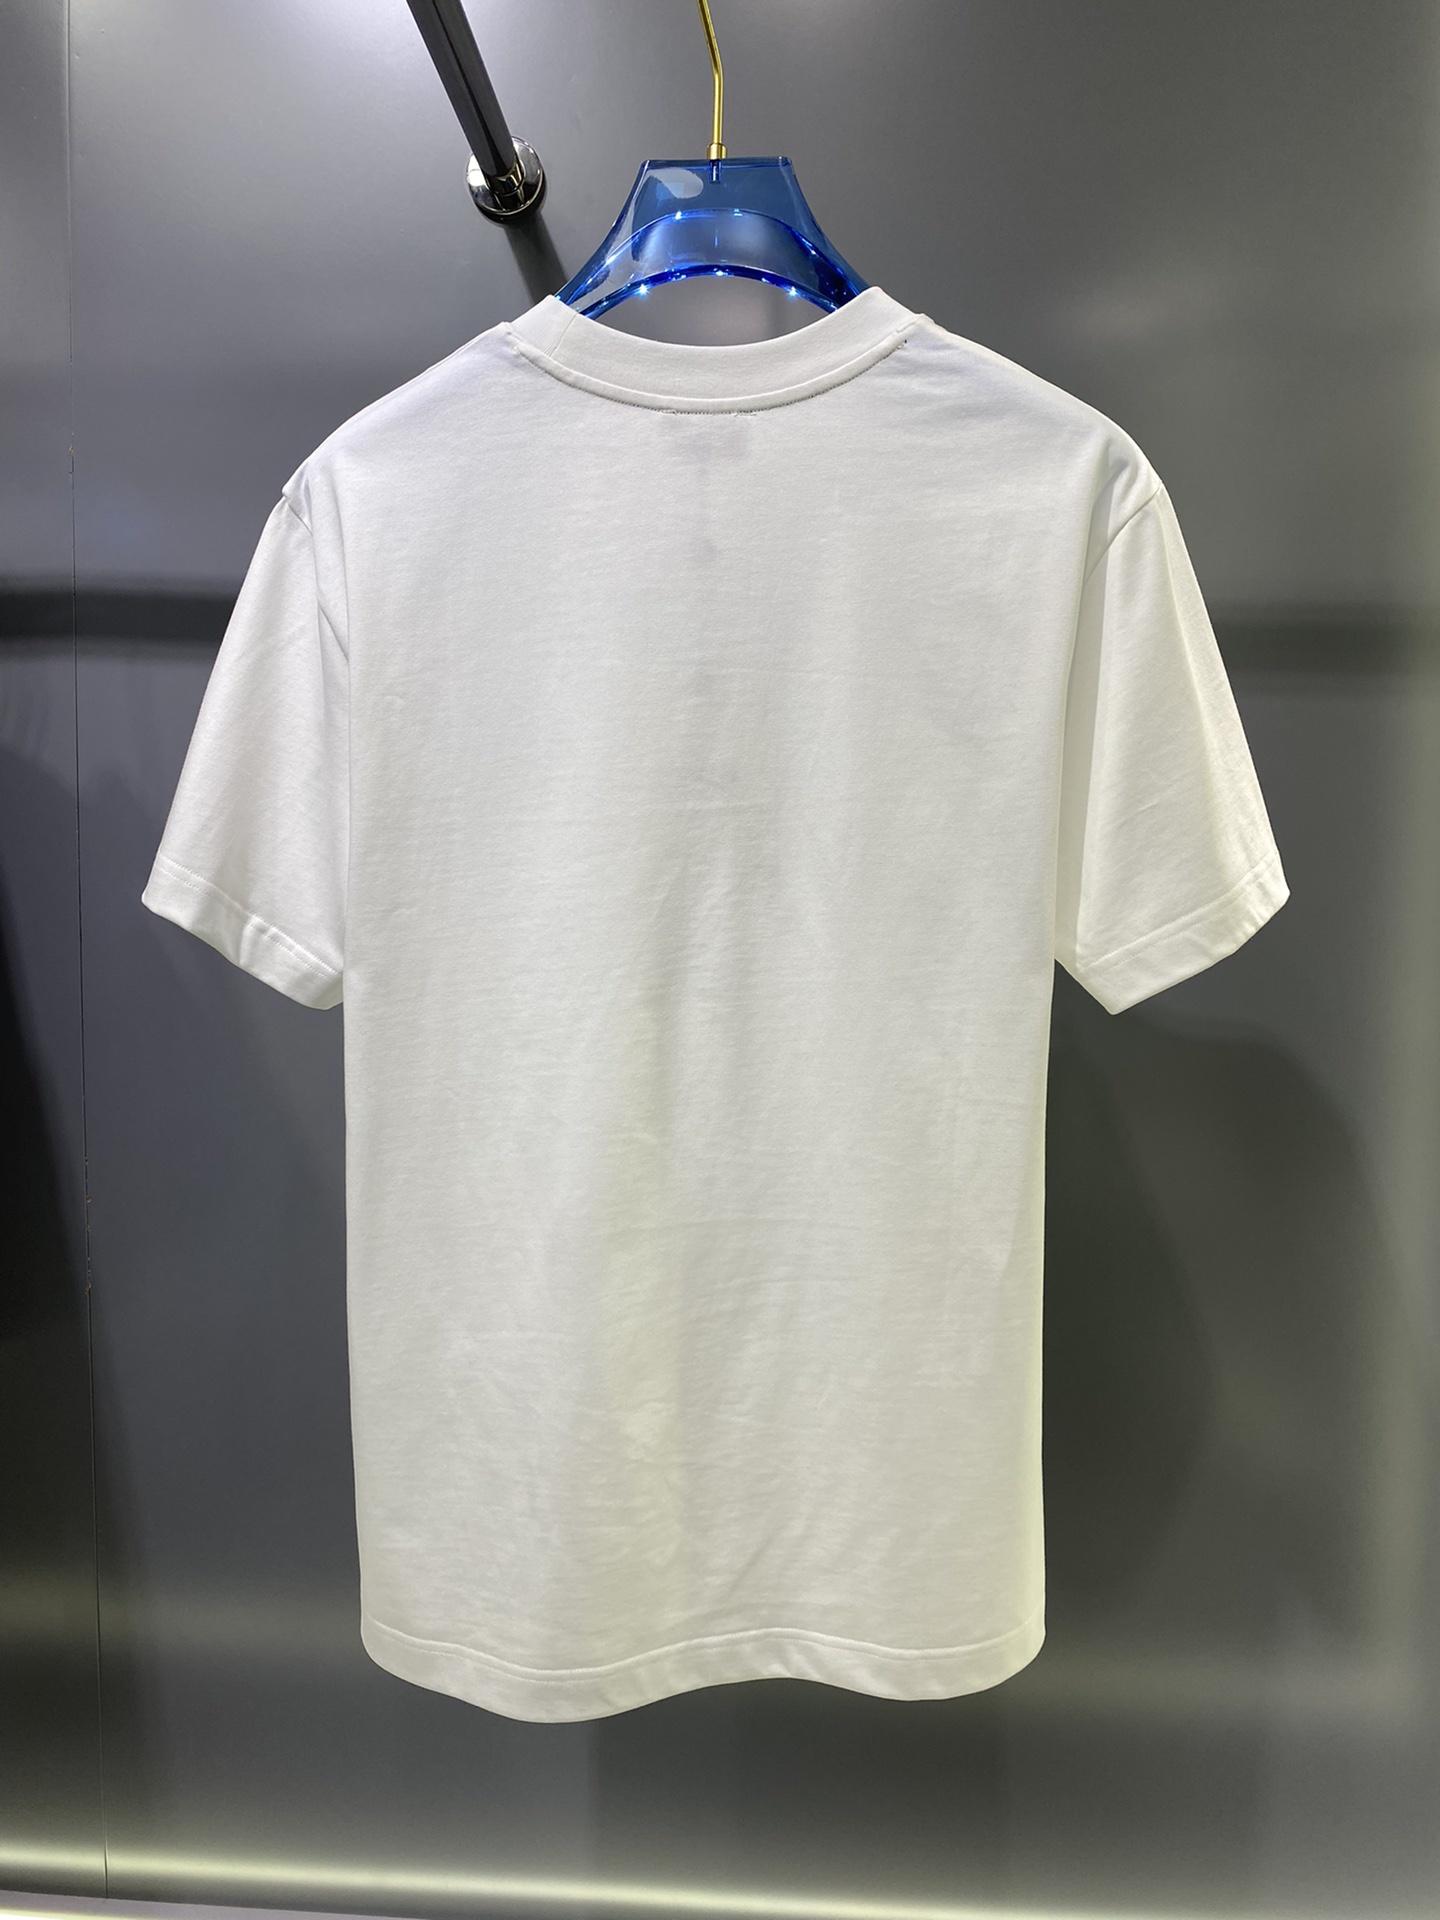 ssMon纯棉质微阔版圆领男士短袖T恤新季新推系列将标识巧妙融入设计在这款百搭T恤上带着一丝怀旧意蕴的图